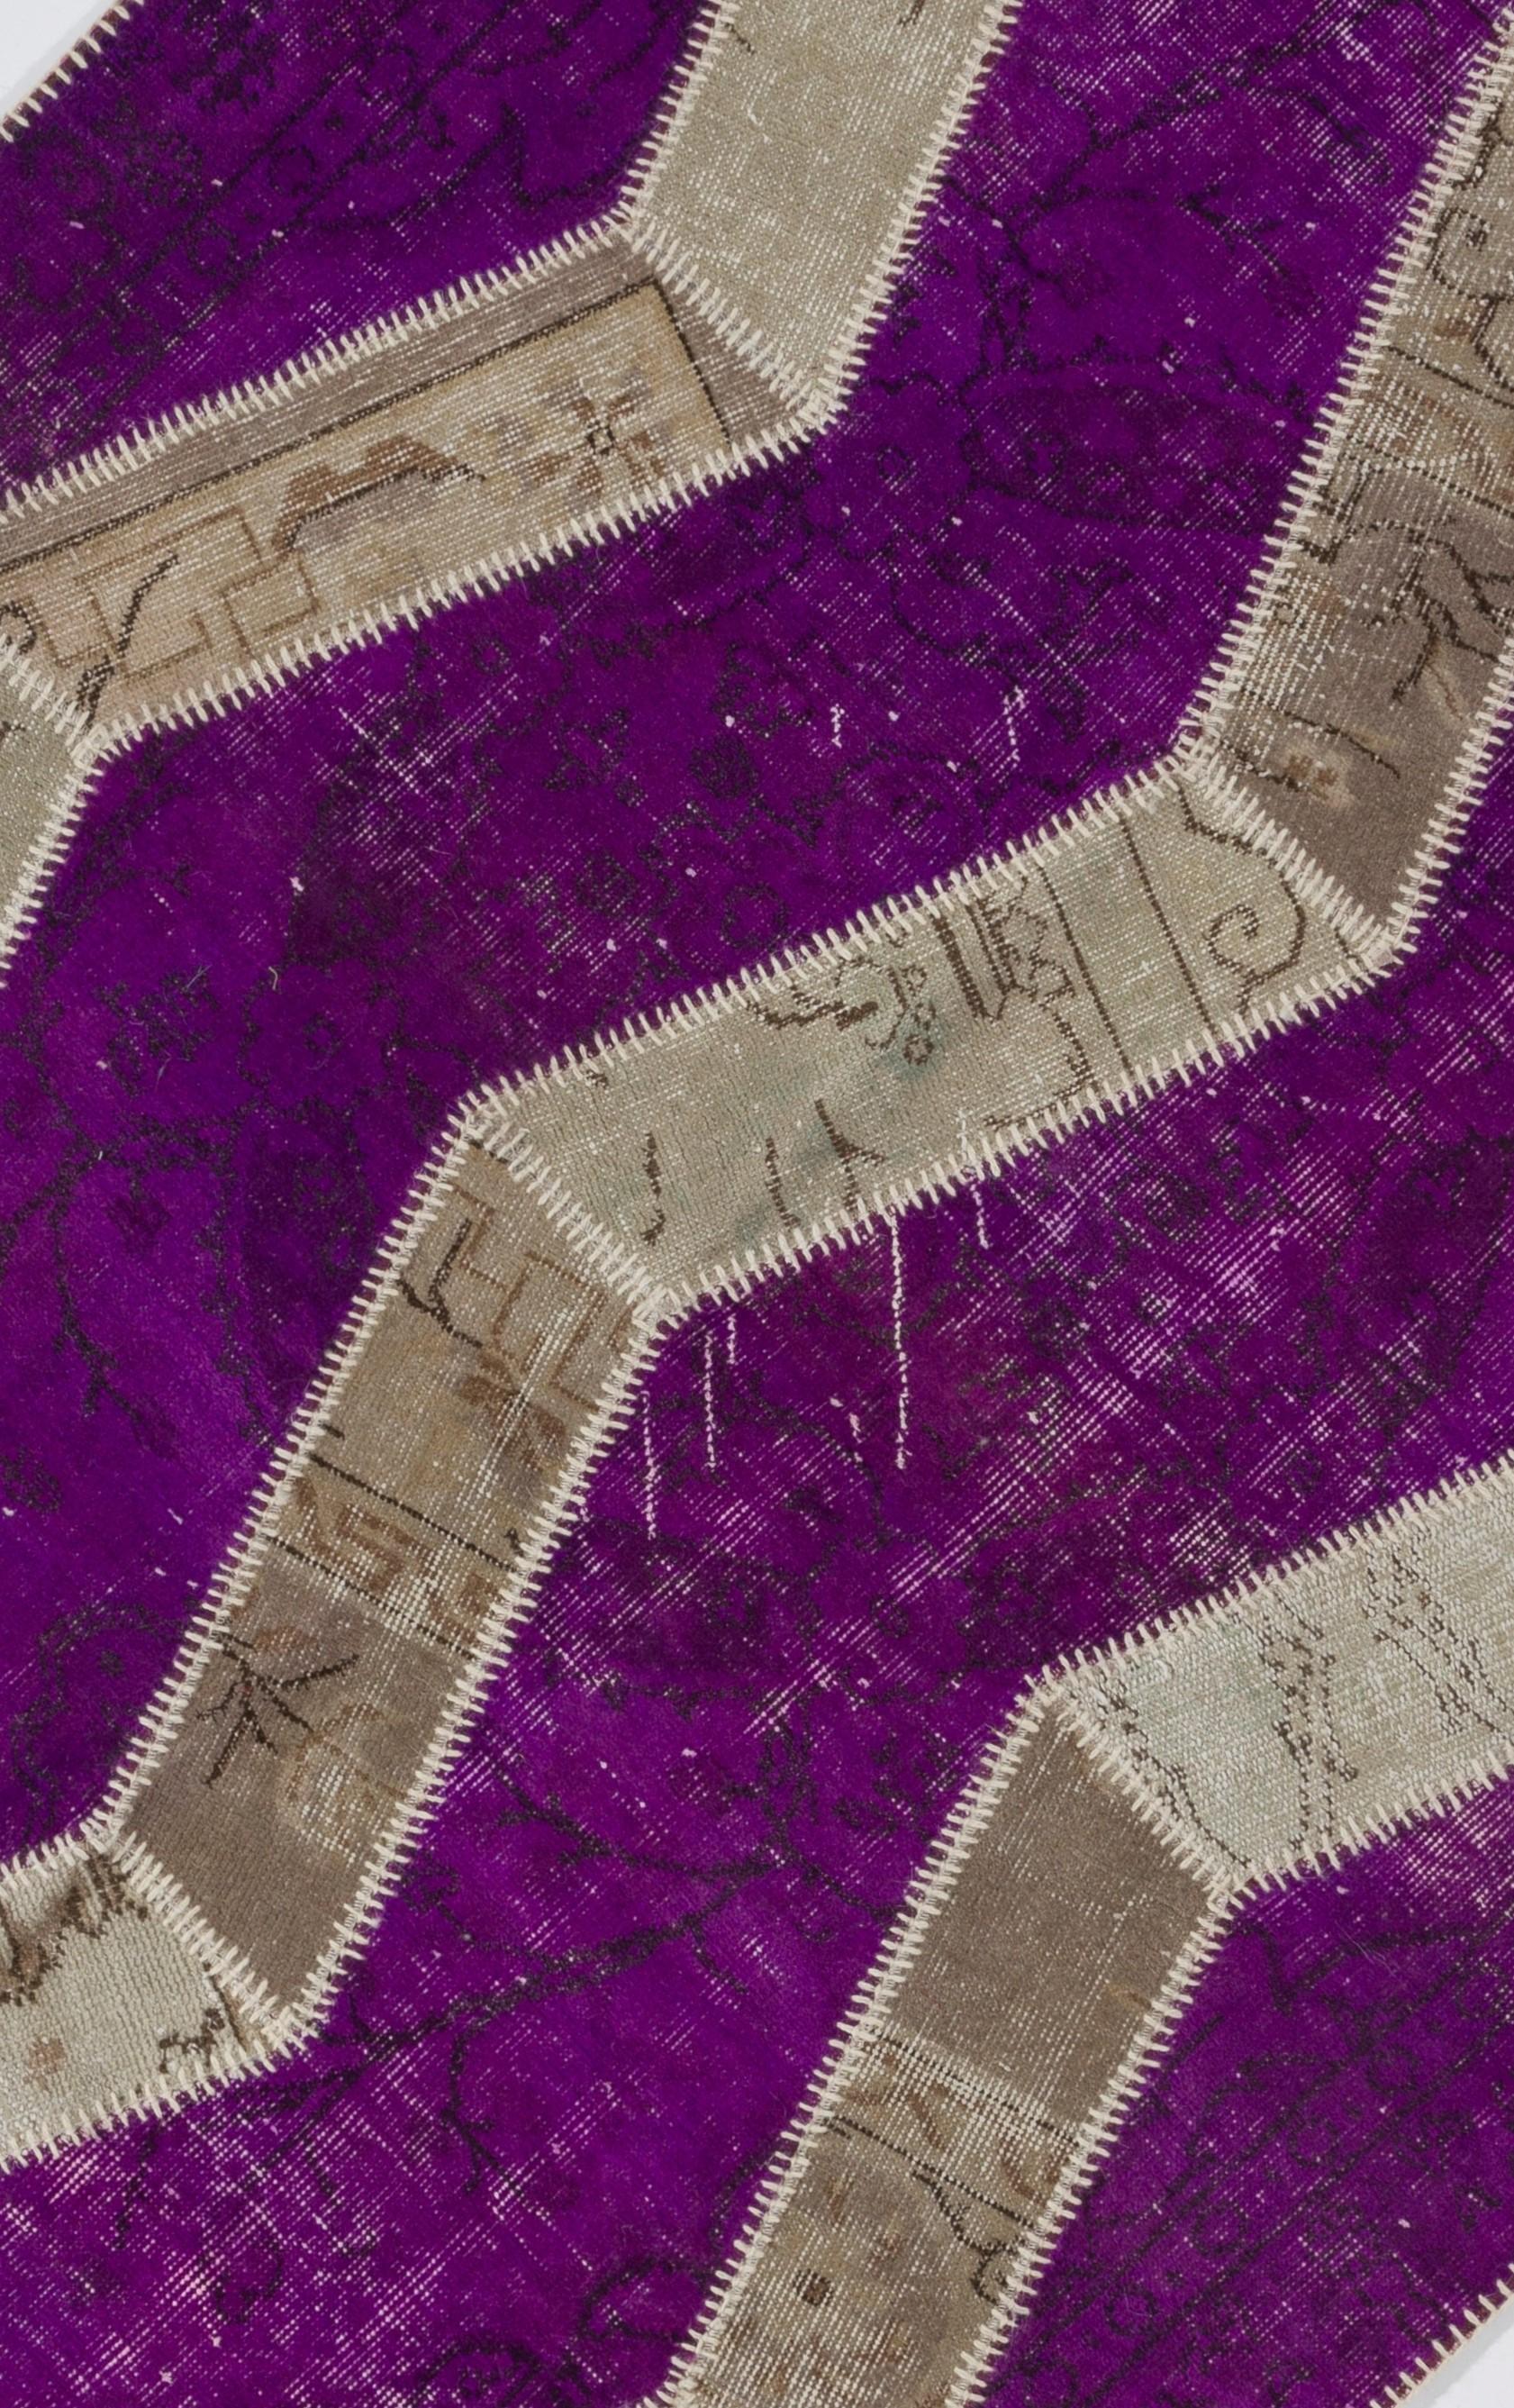 Hand-Woven Zig Zag Design Patchwork Rug, Purple, Beige & Sand Colors. Custom Modern Carpet For Sale